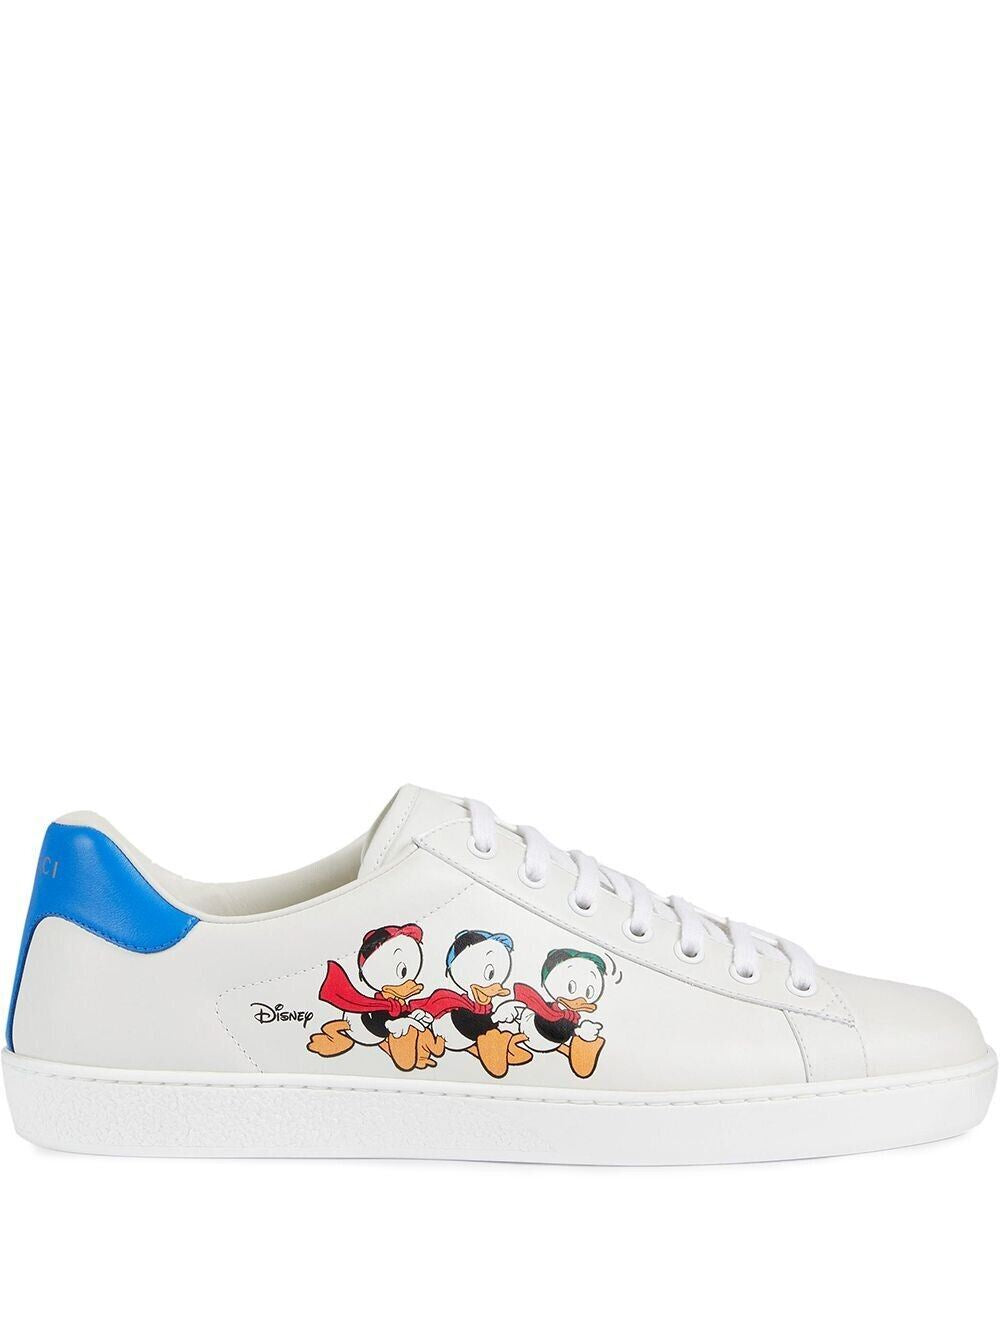 NIB Женские белые кроссовки Gucci Ace Duck Disney 9 США (39 евро) IT 649400 IT 